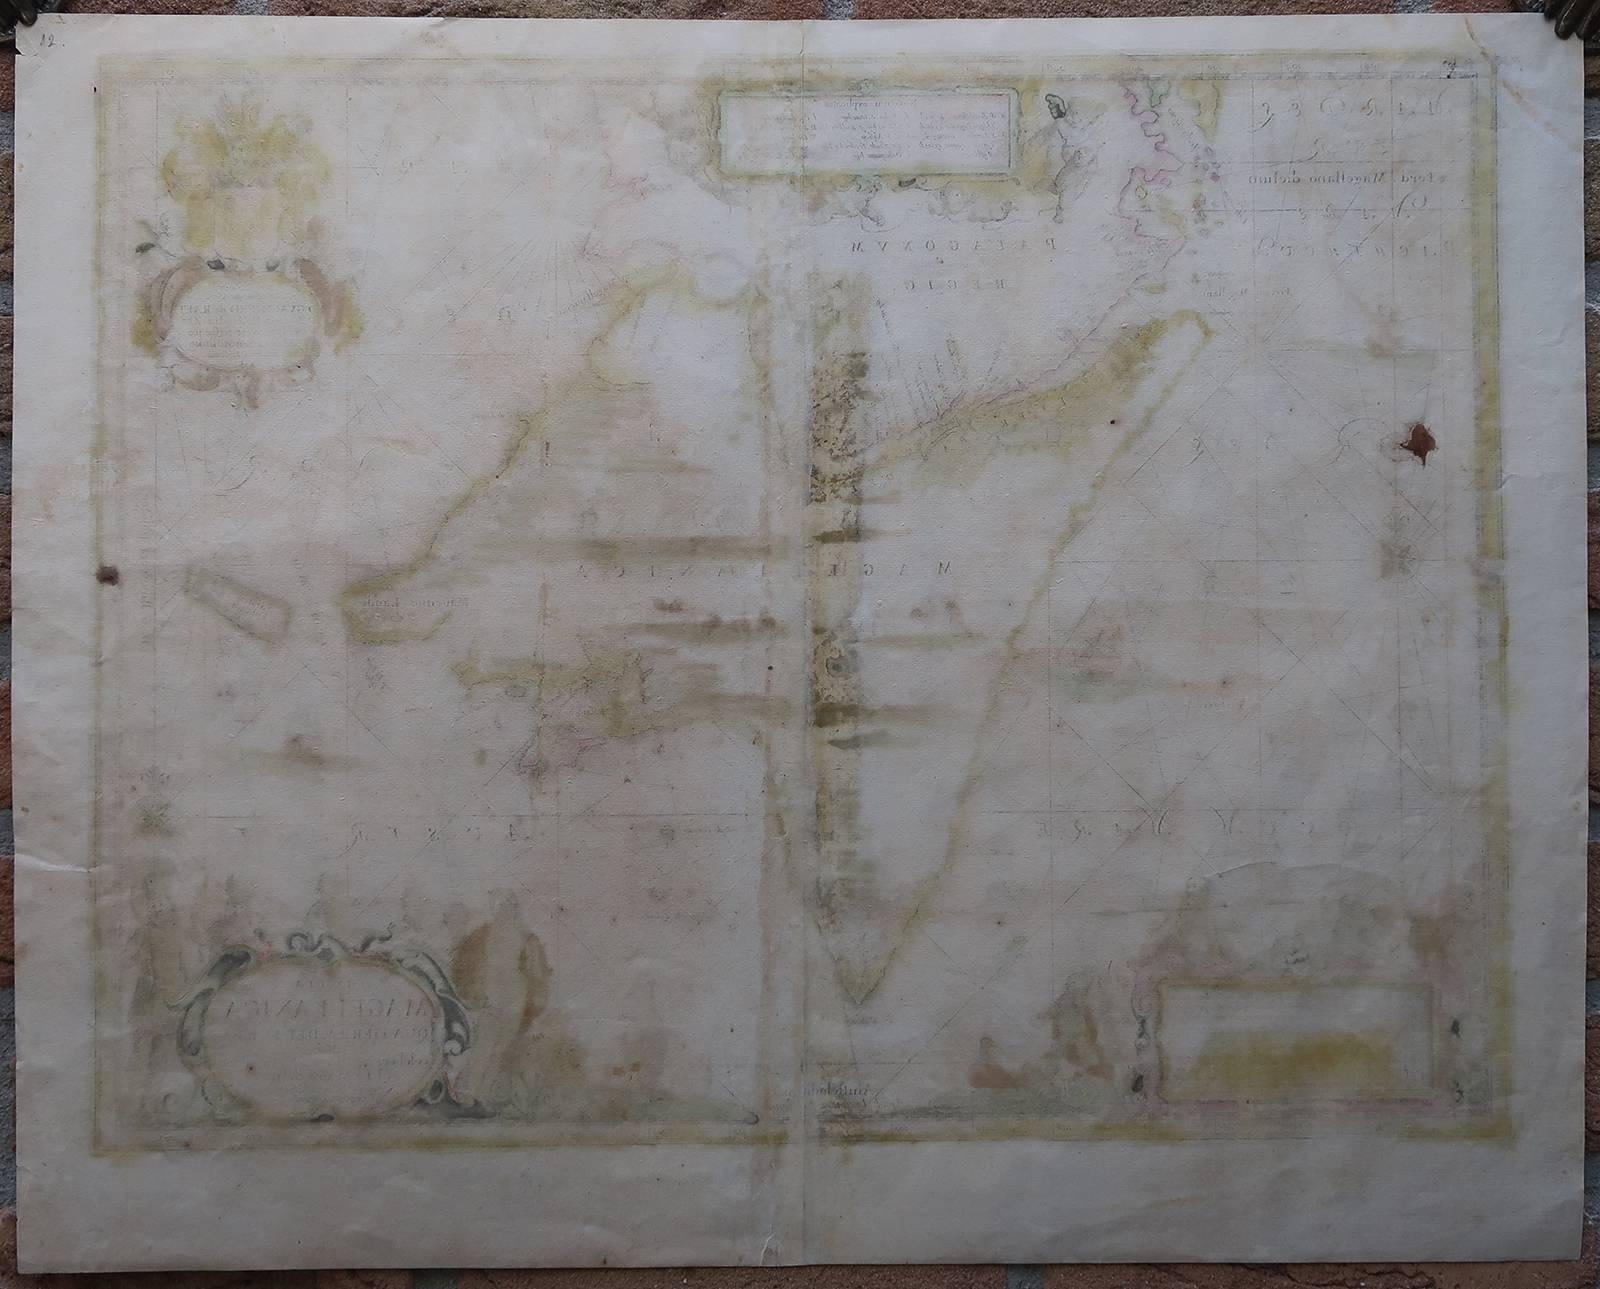 Tabula Magellanica qua Tierrae del Fuego. - Print by Johannes Janssonius